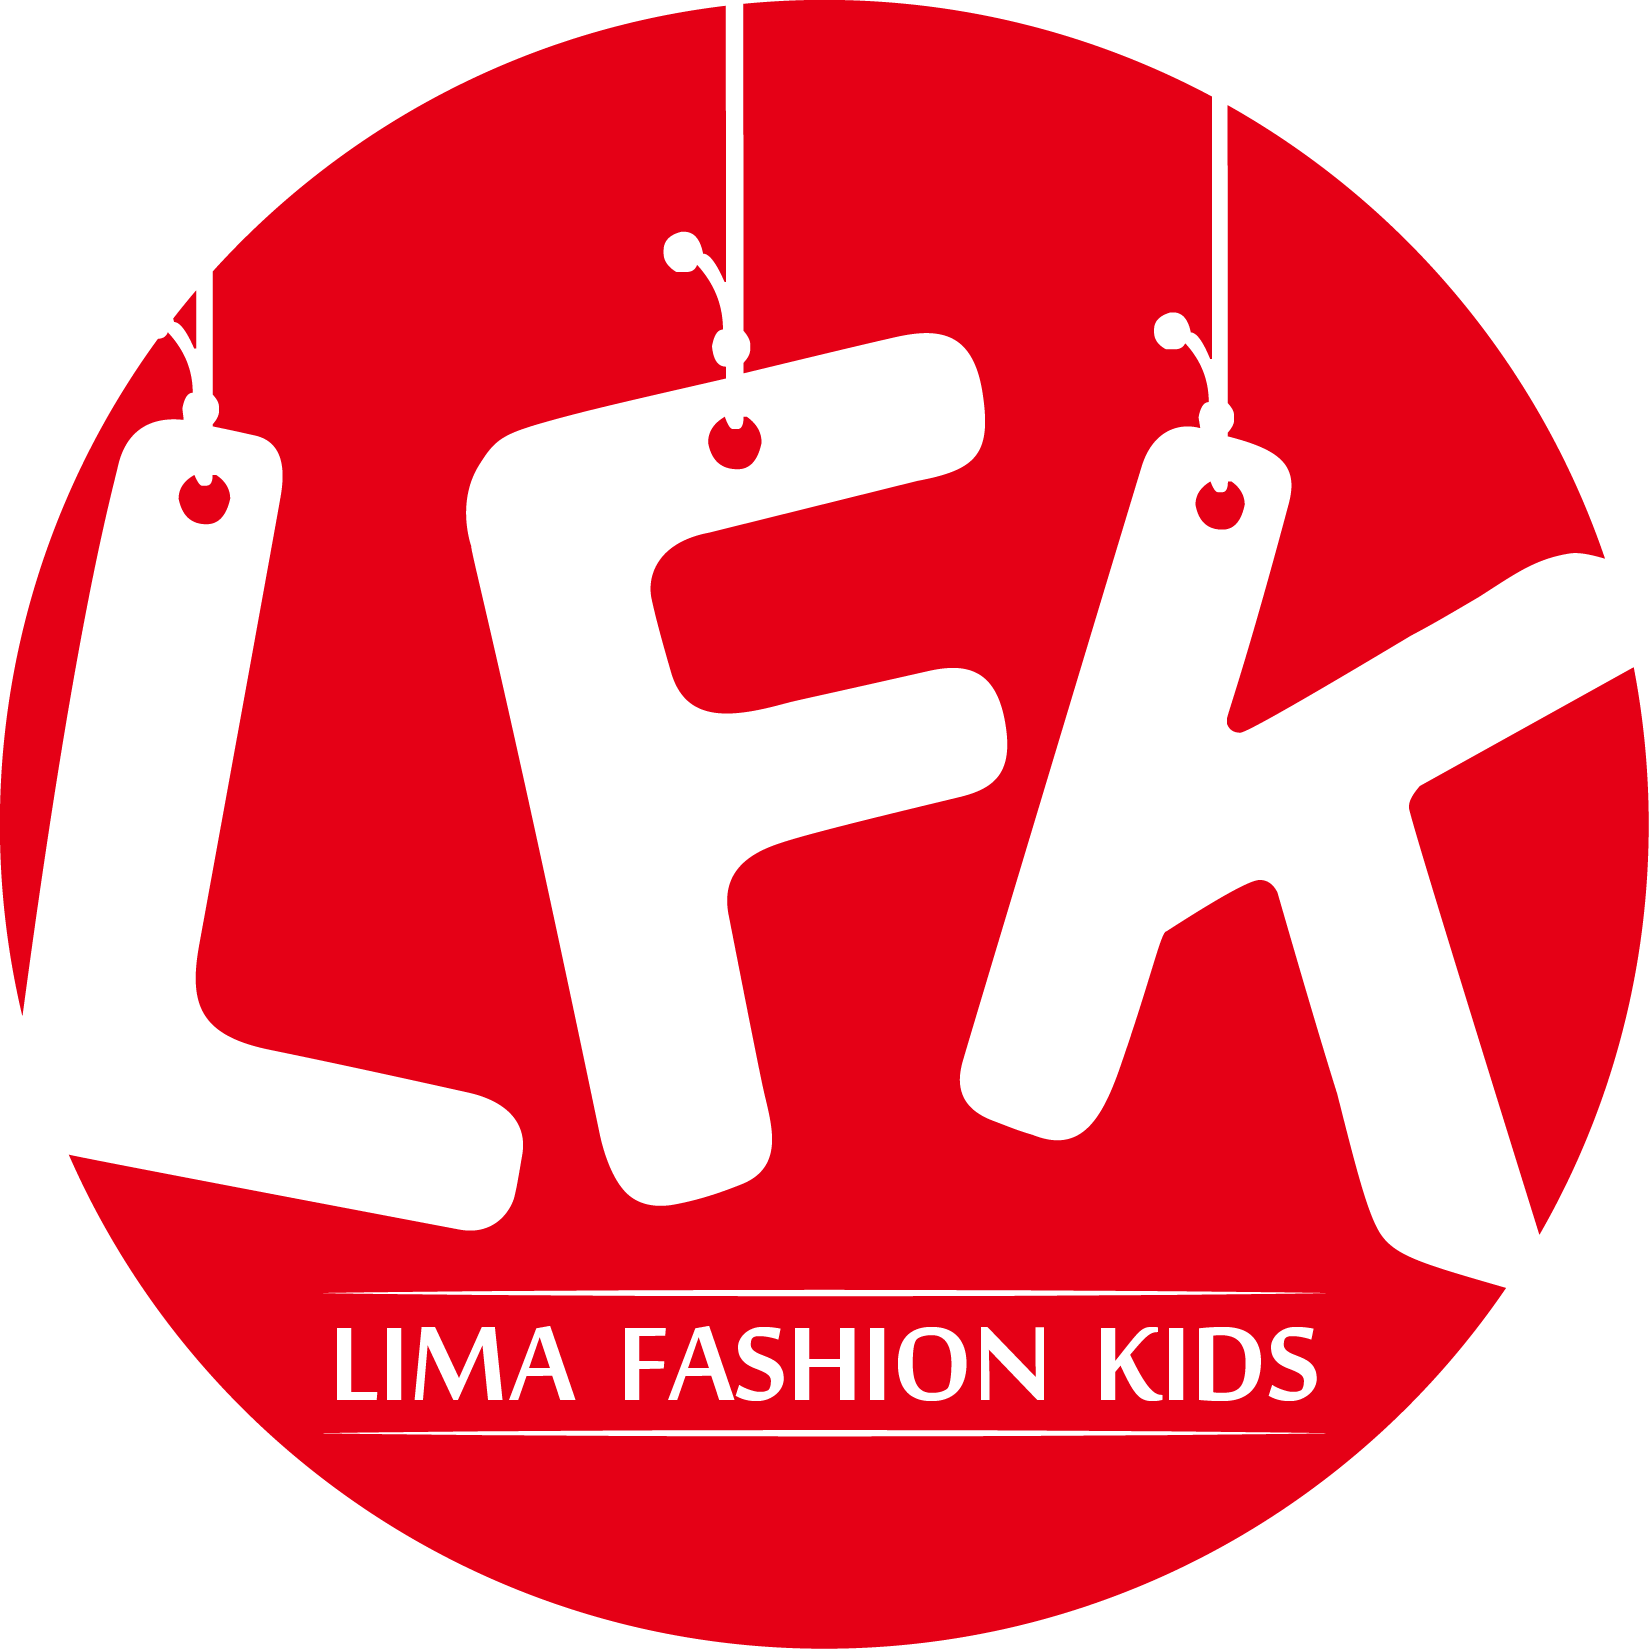 Lima Fashion Kids